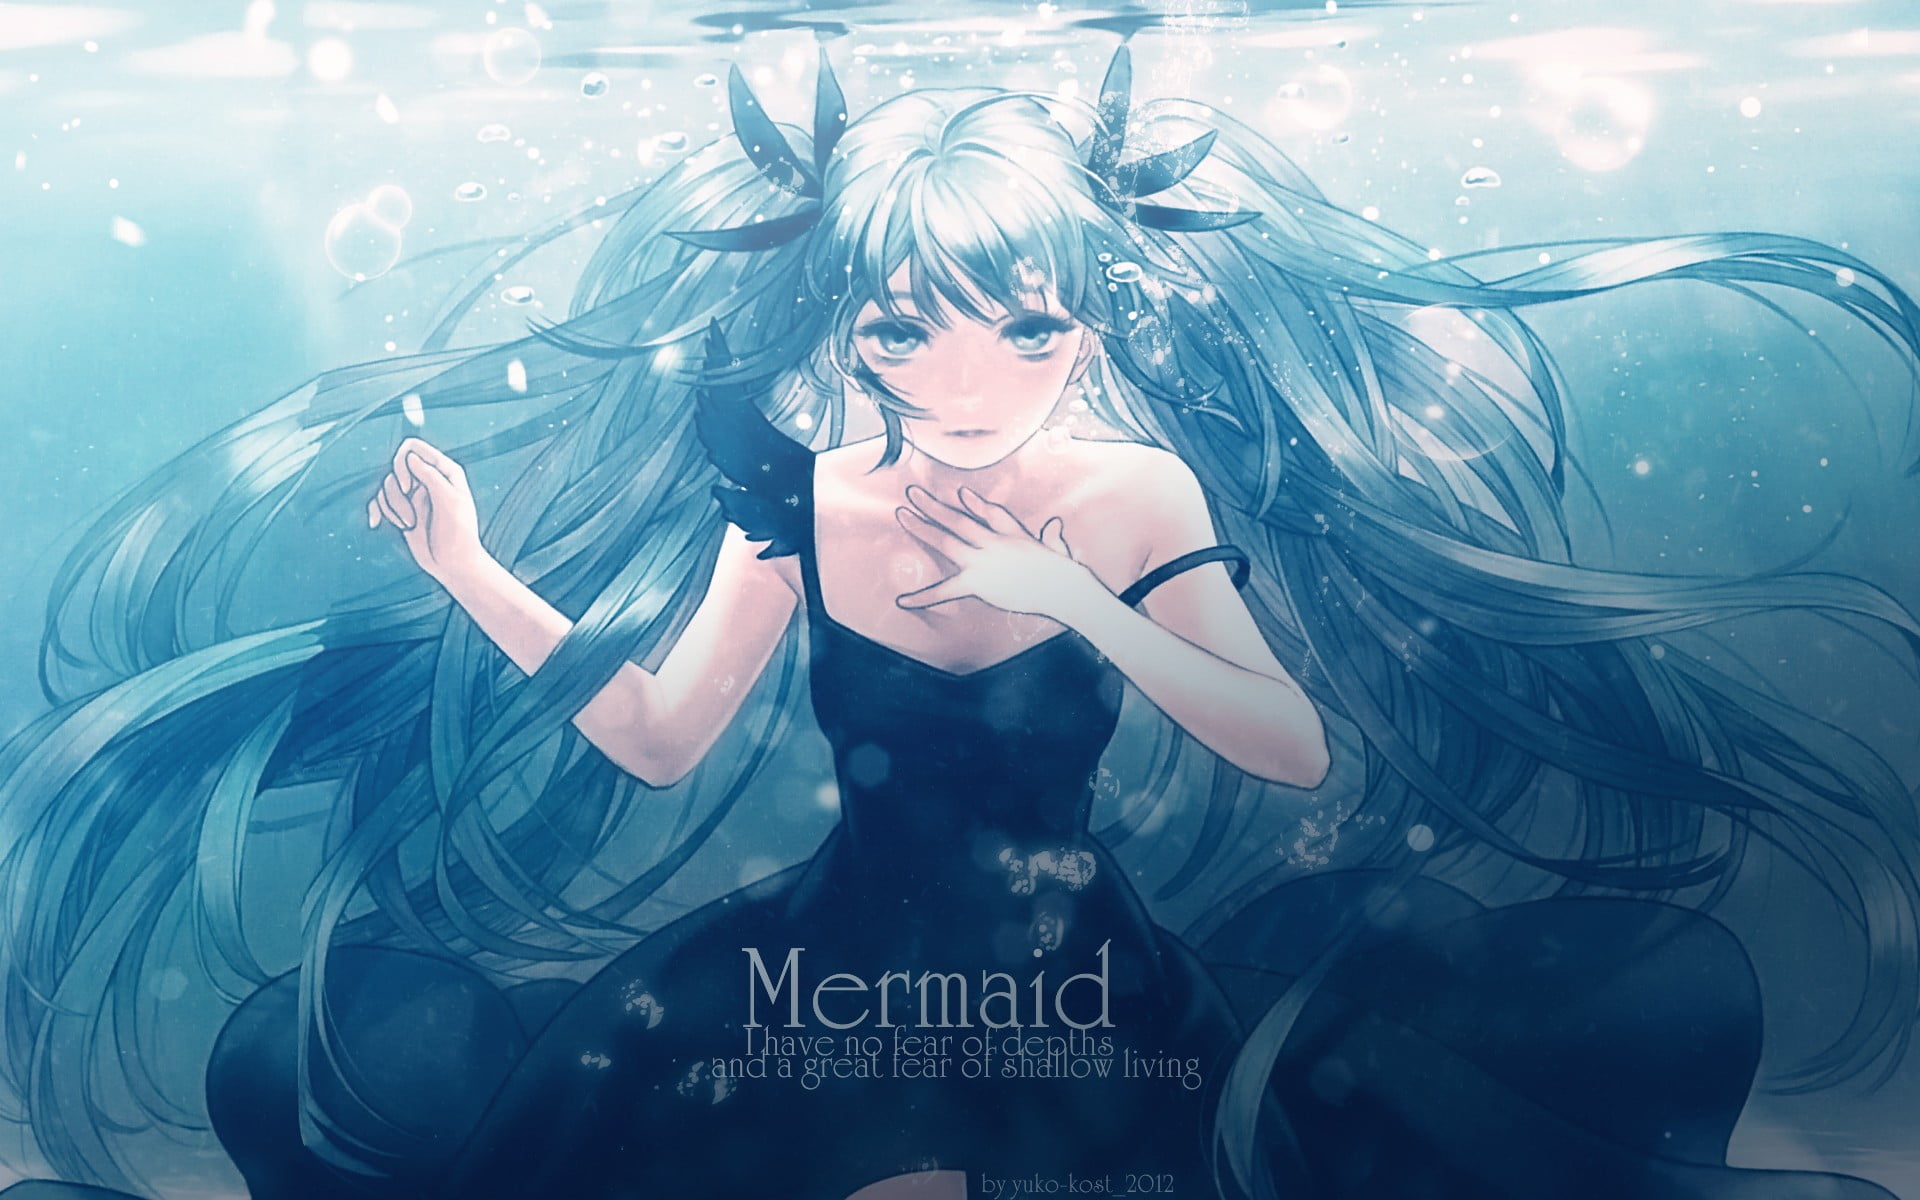 18+ Anime Mermaid Wallpaper Images - Anime Top Wallpaper